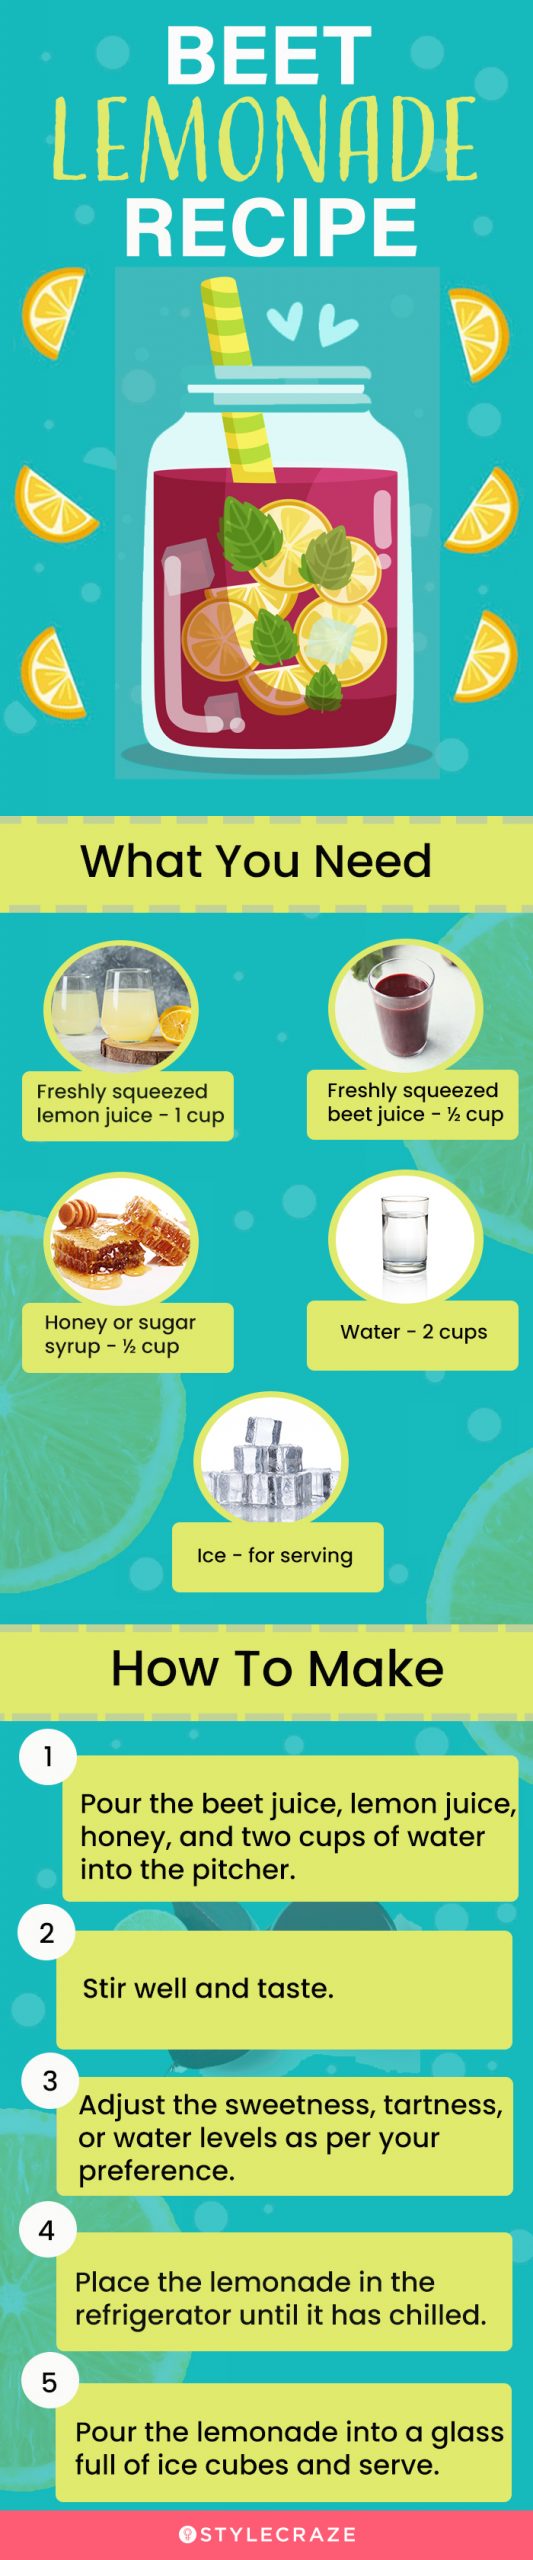 beetlemonade juice recipe [infographic]